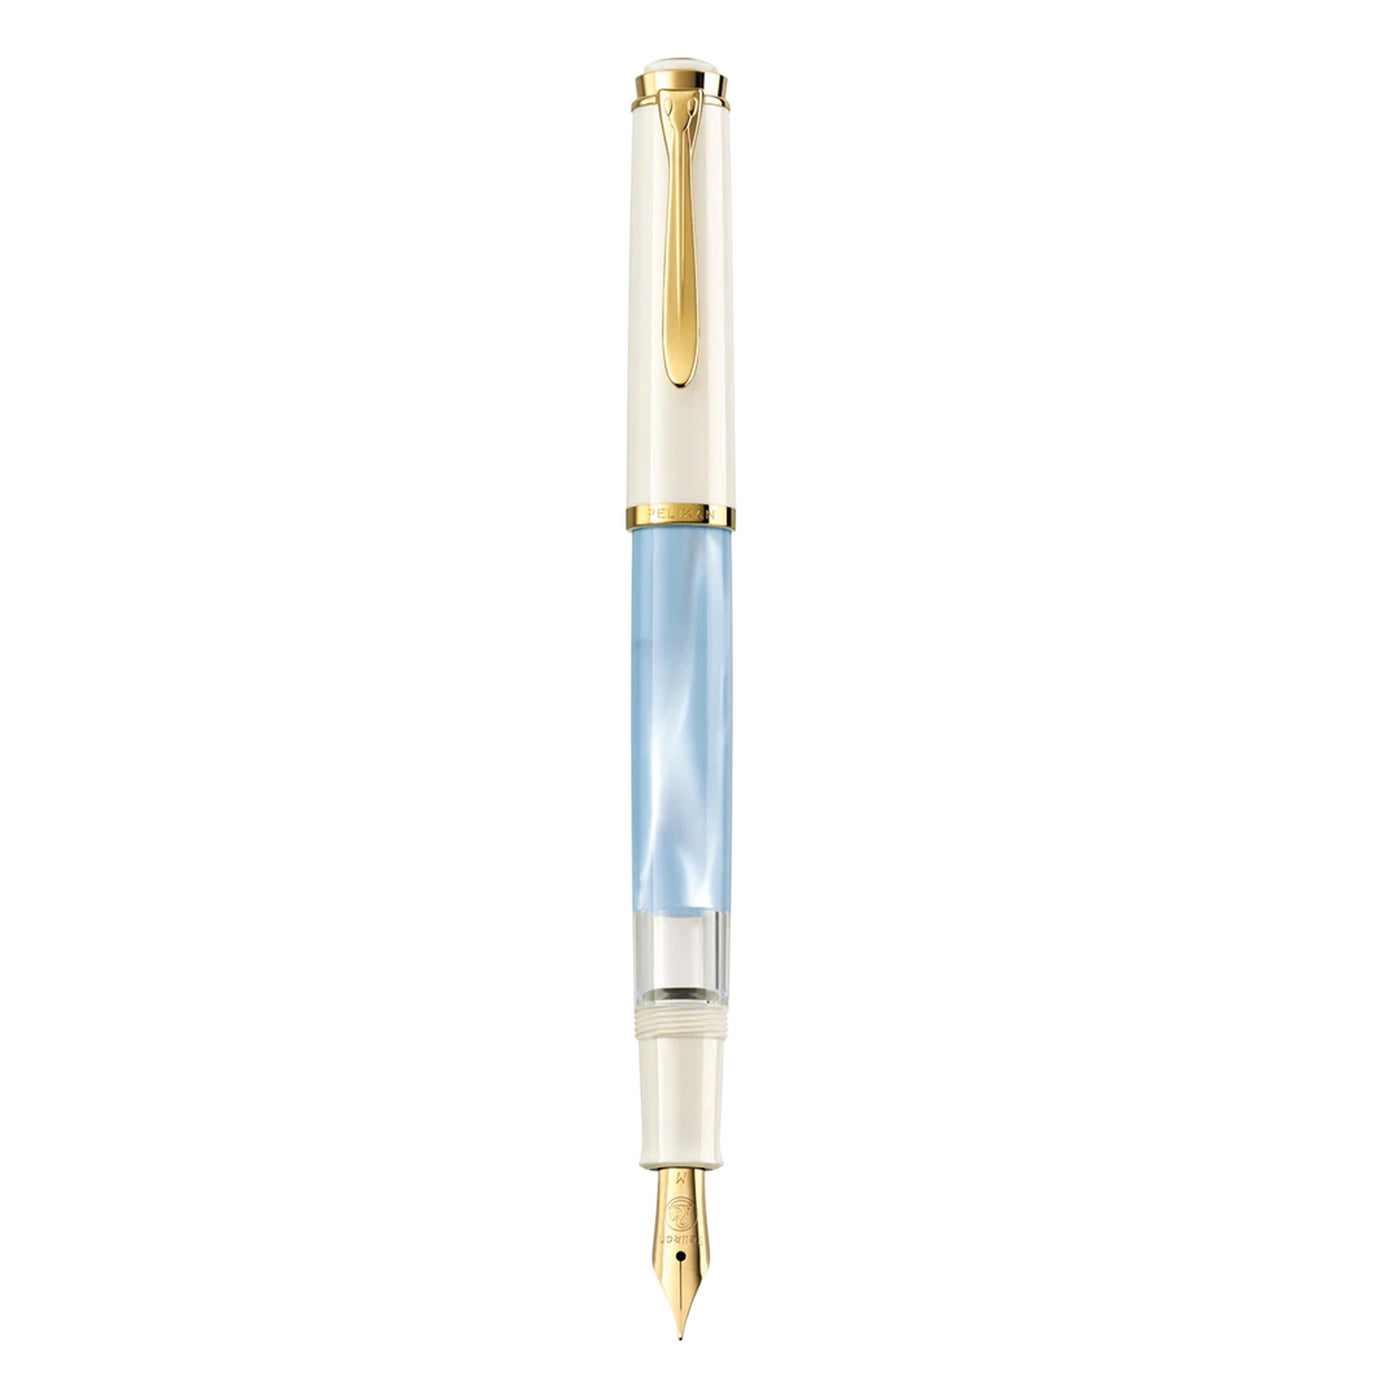 Pelikan M200 Classic Fountain Pen - Pastel Green – The Pleasure of